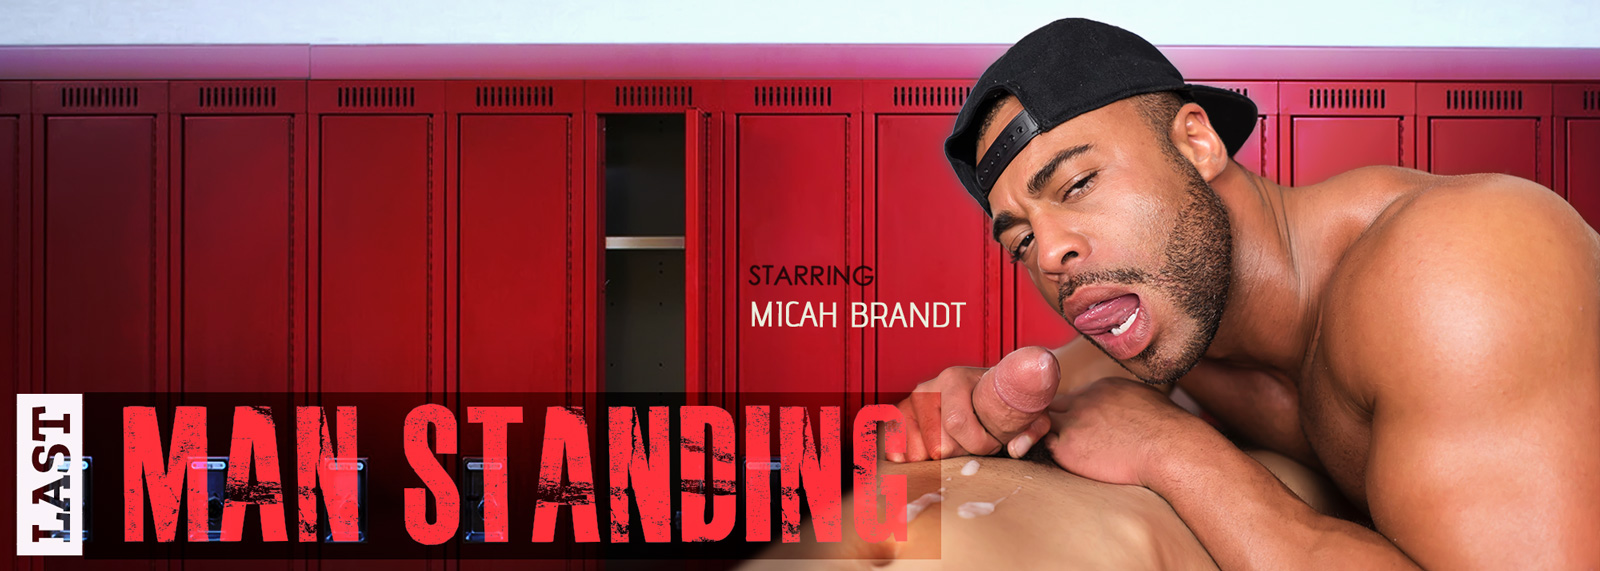 Last Man Standing - VR Porn Video, Starring: Micah Brandt VR